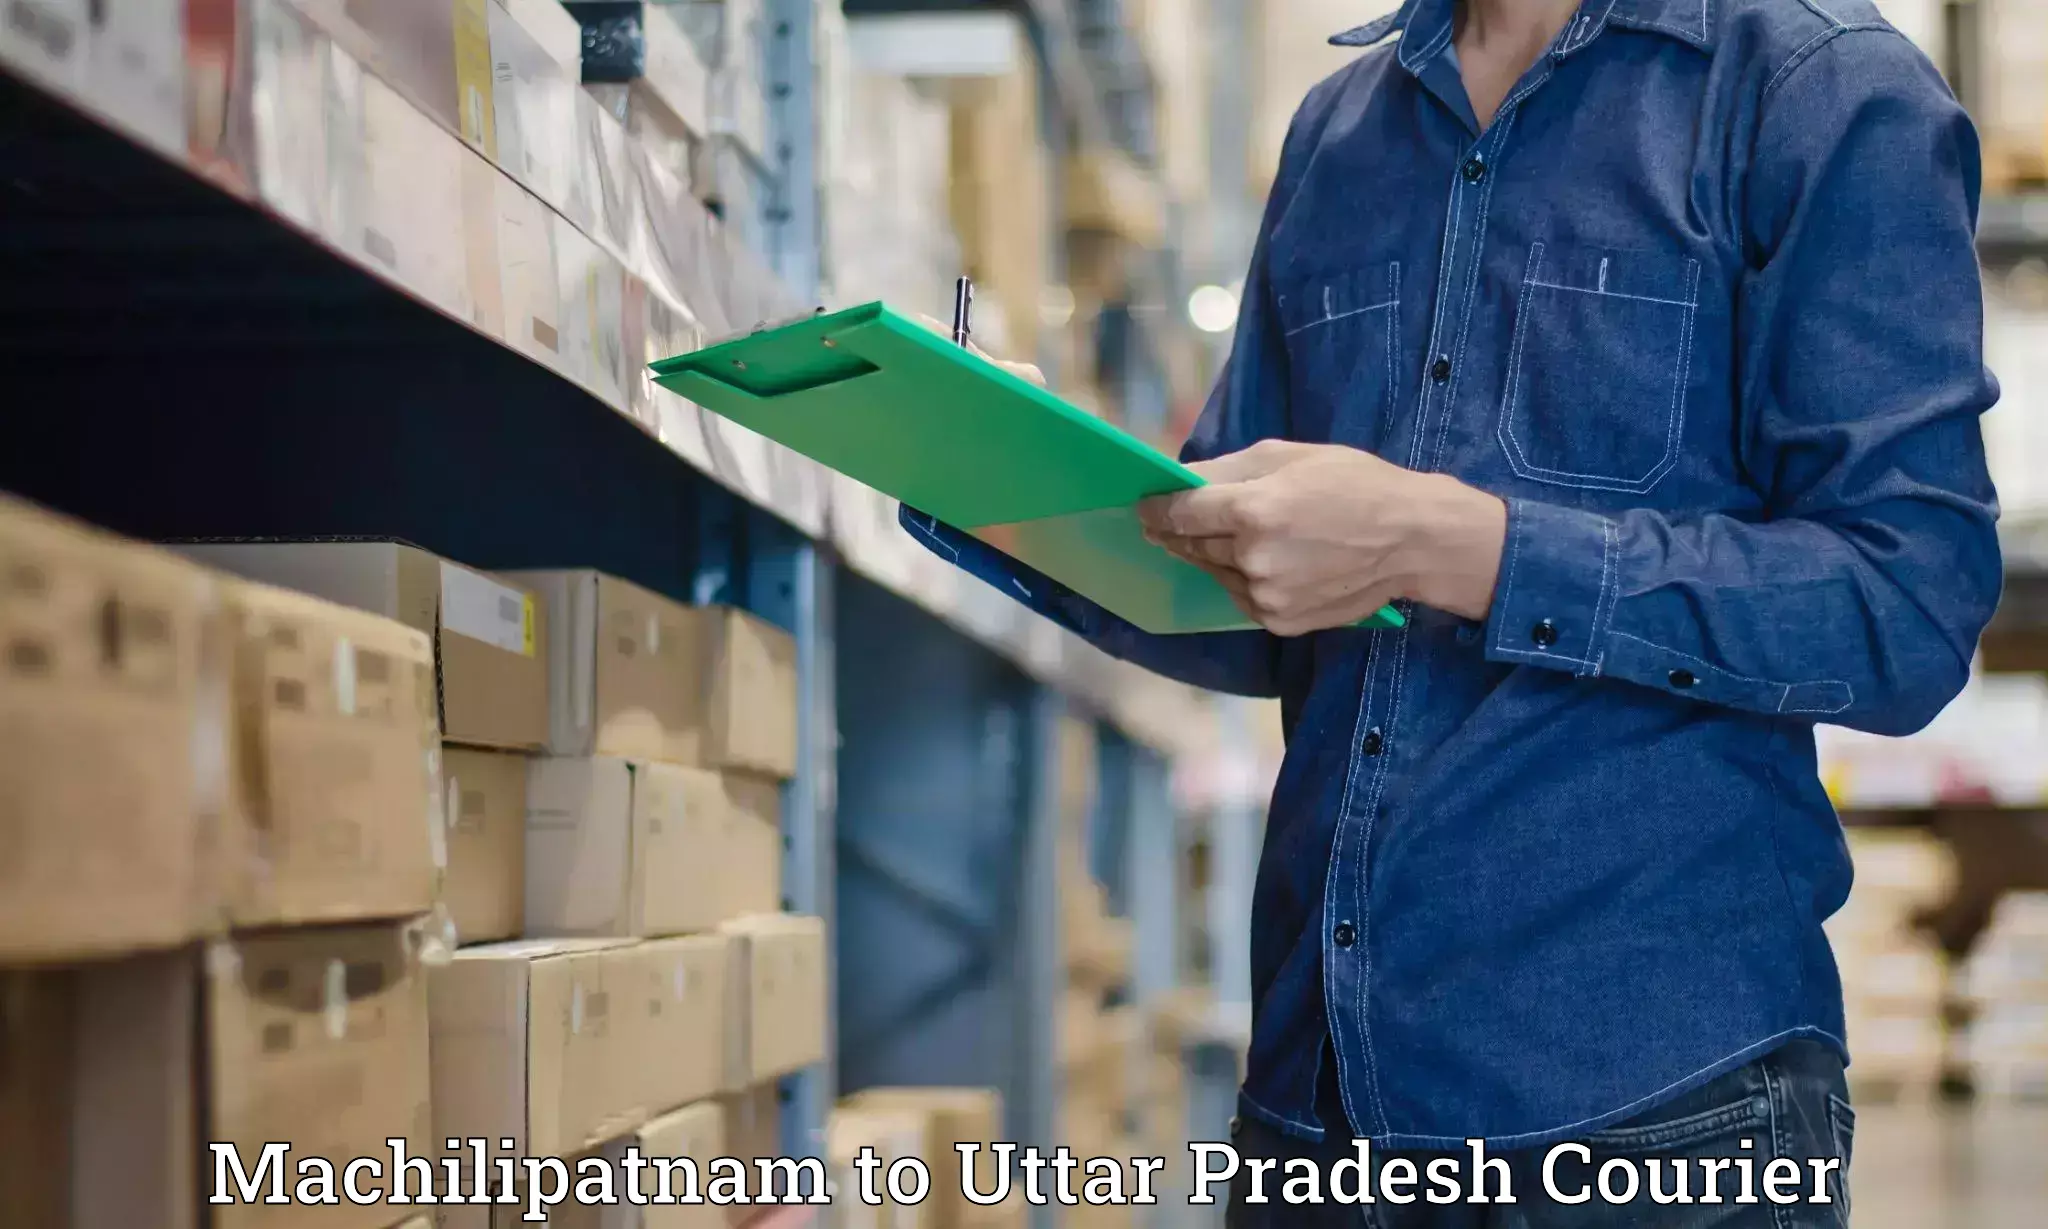 Versatile courier offerings Machilipatnam to Aligarh